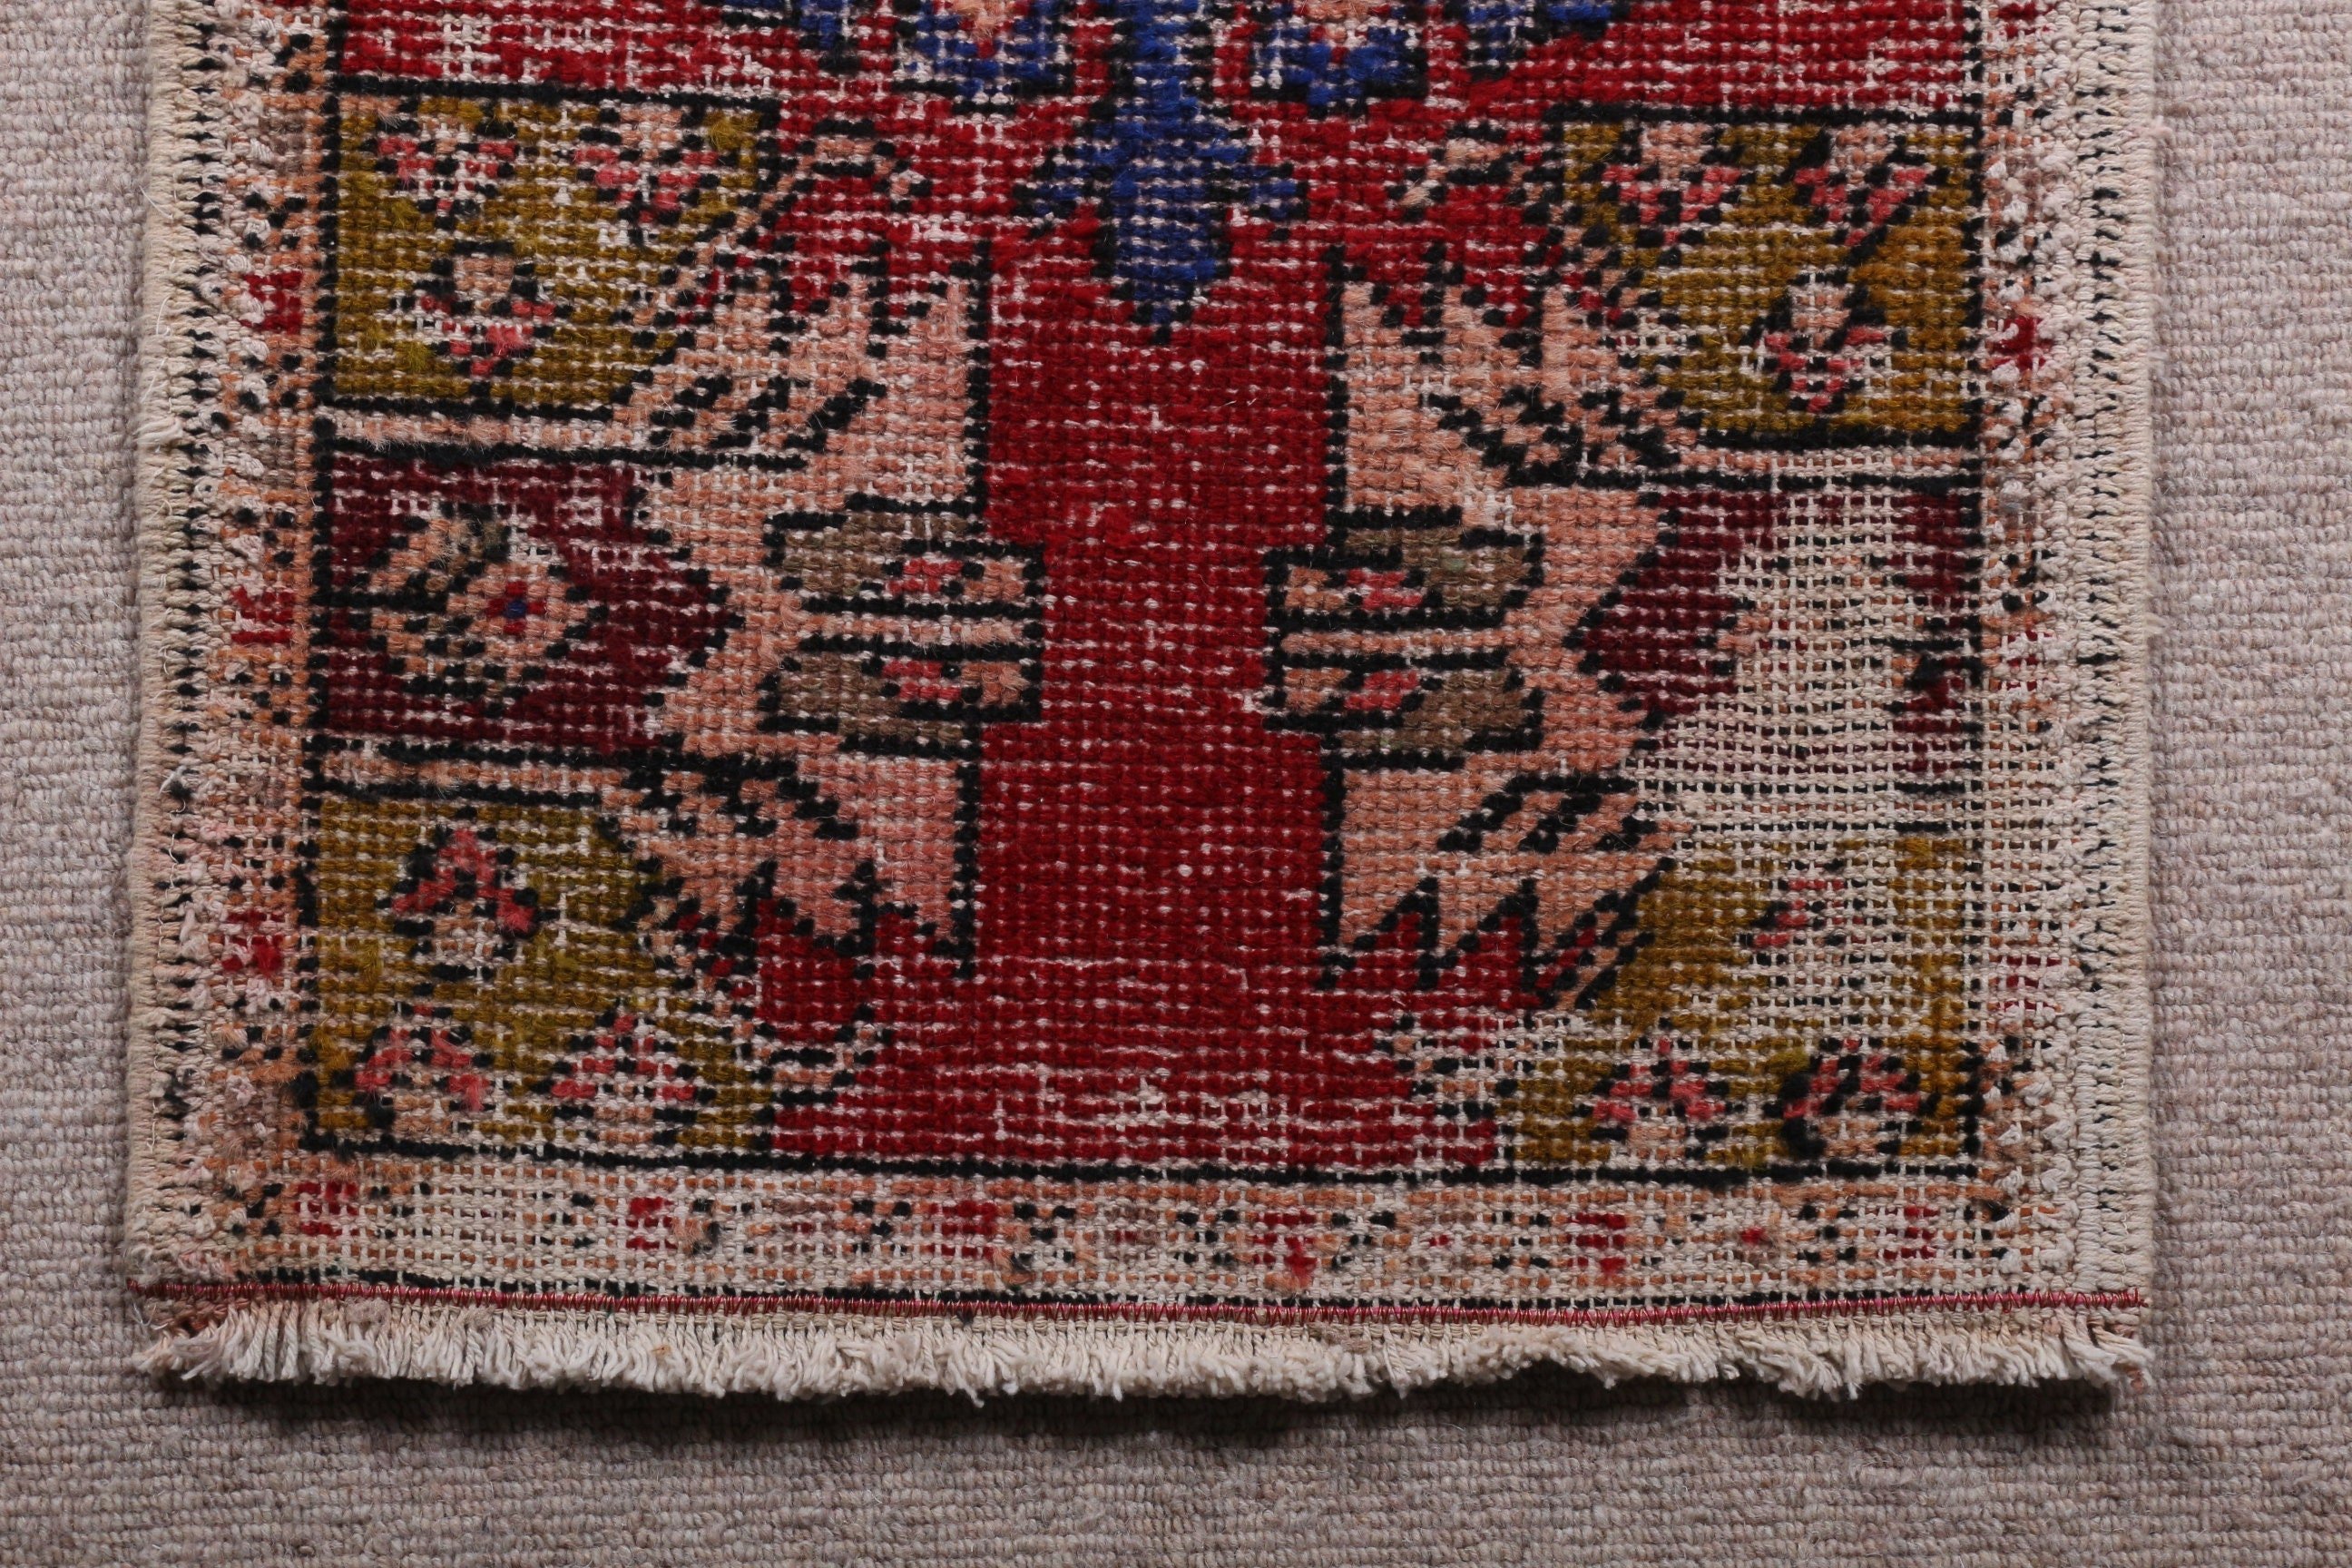 Moroccan Rug, 2.7x1.6 ft Small Rugs, Vintage Rug, Wall Hanging Rugs, Home Decor Rug, Turkish Rug, Red Bedroom Rug, Entry Rug, Natural Rug